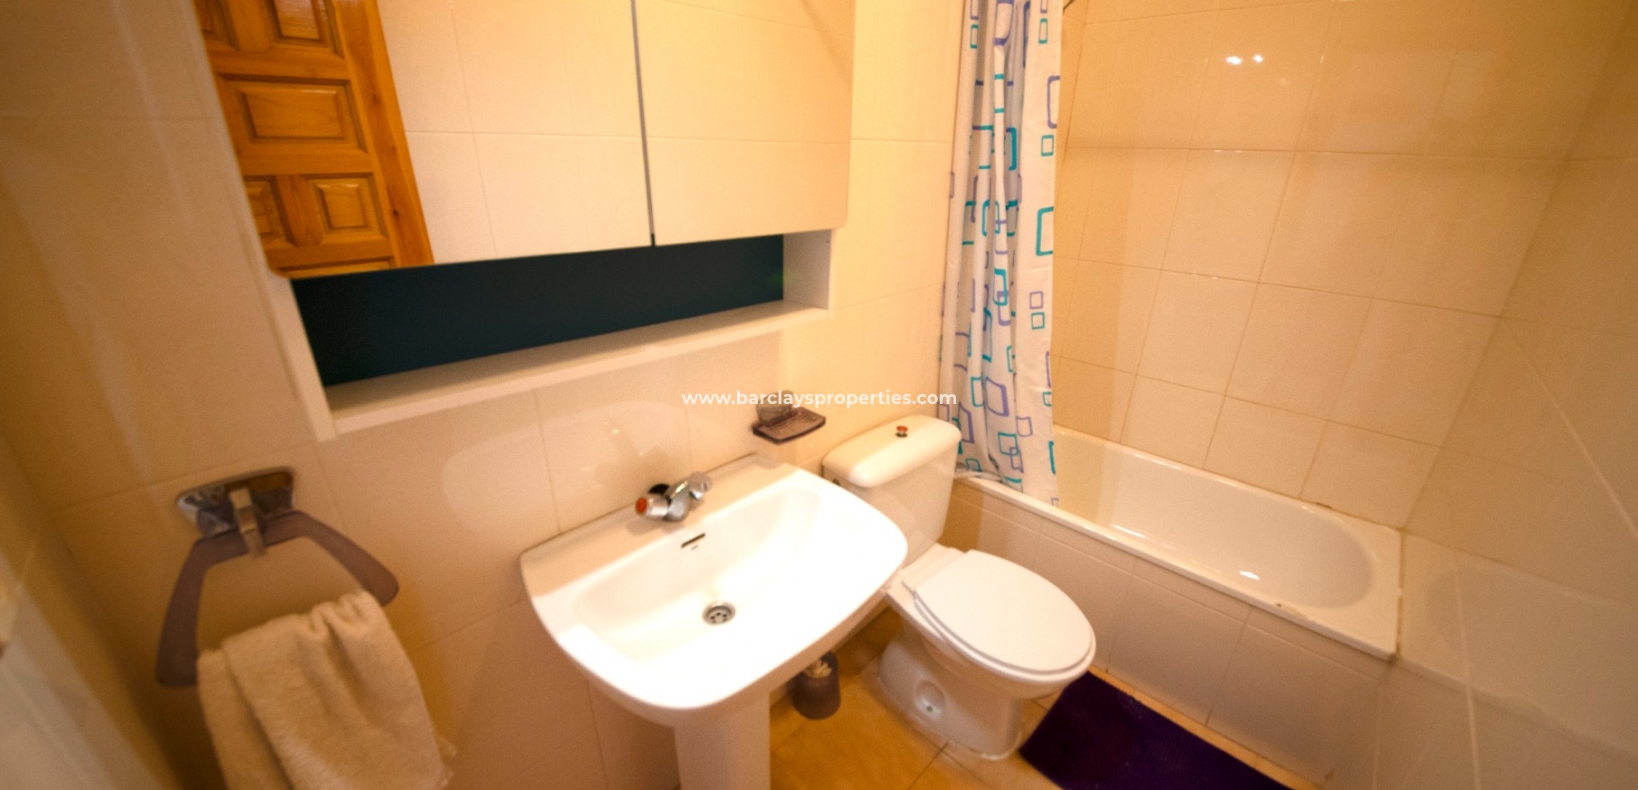 Bathroom - Cheap House For Sale in La Marina